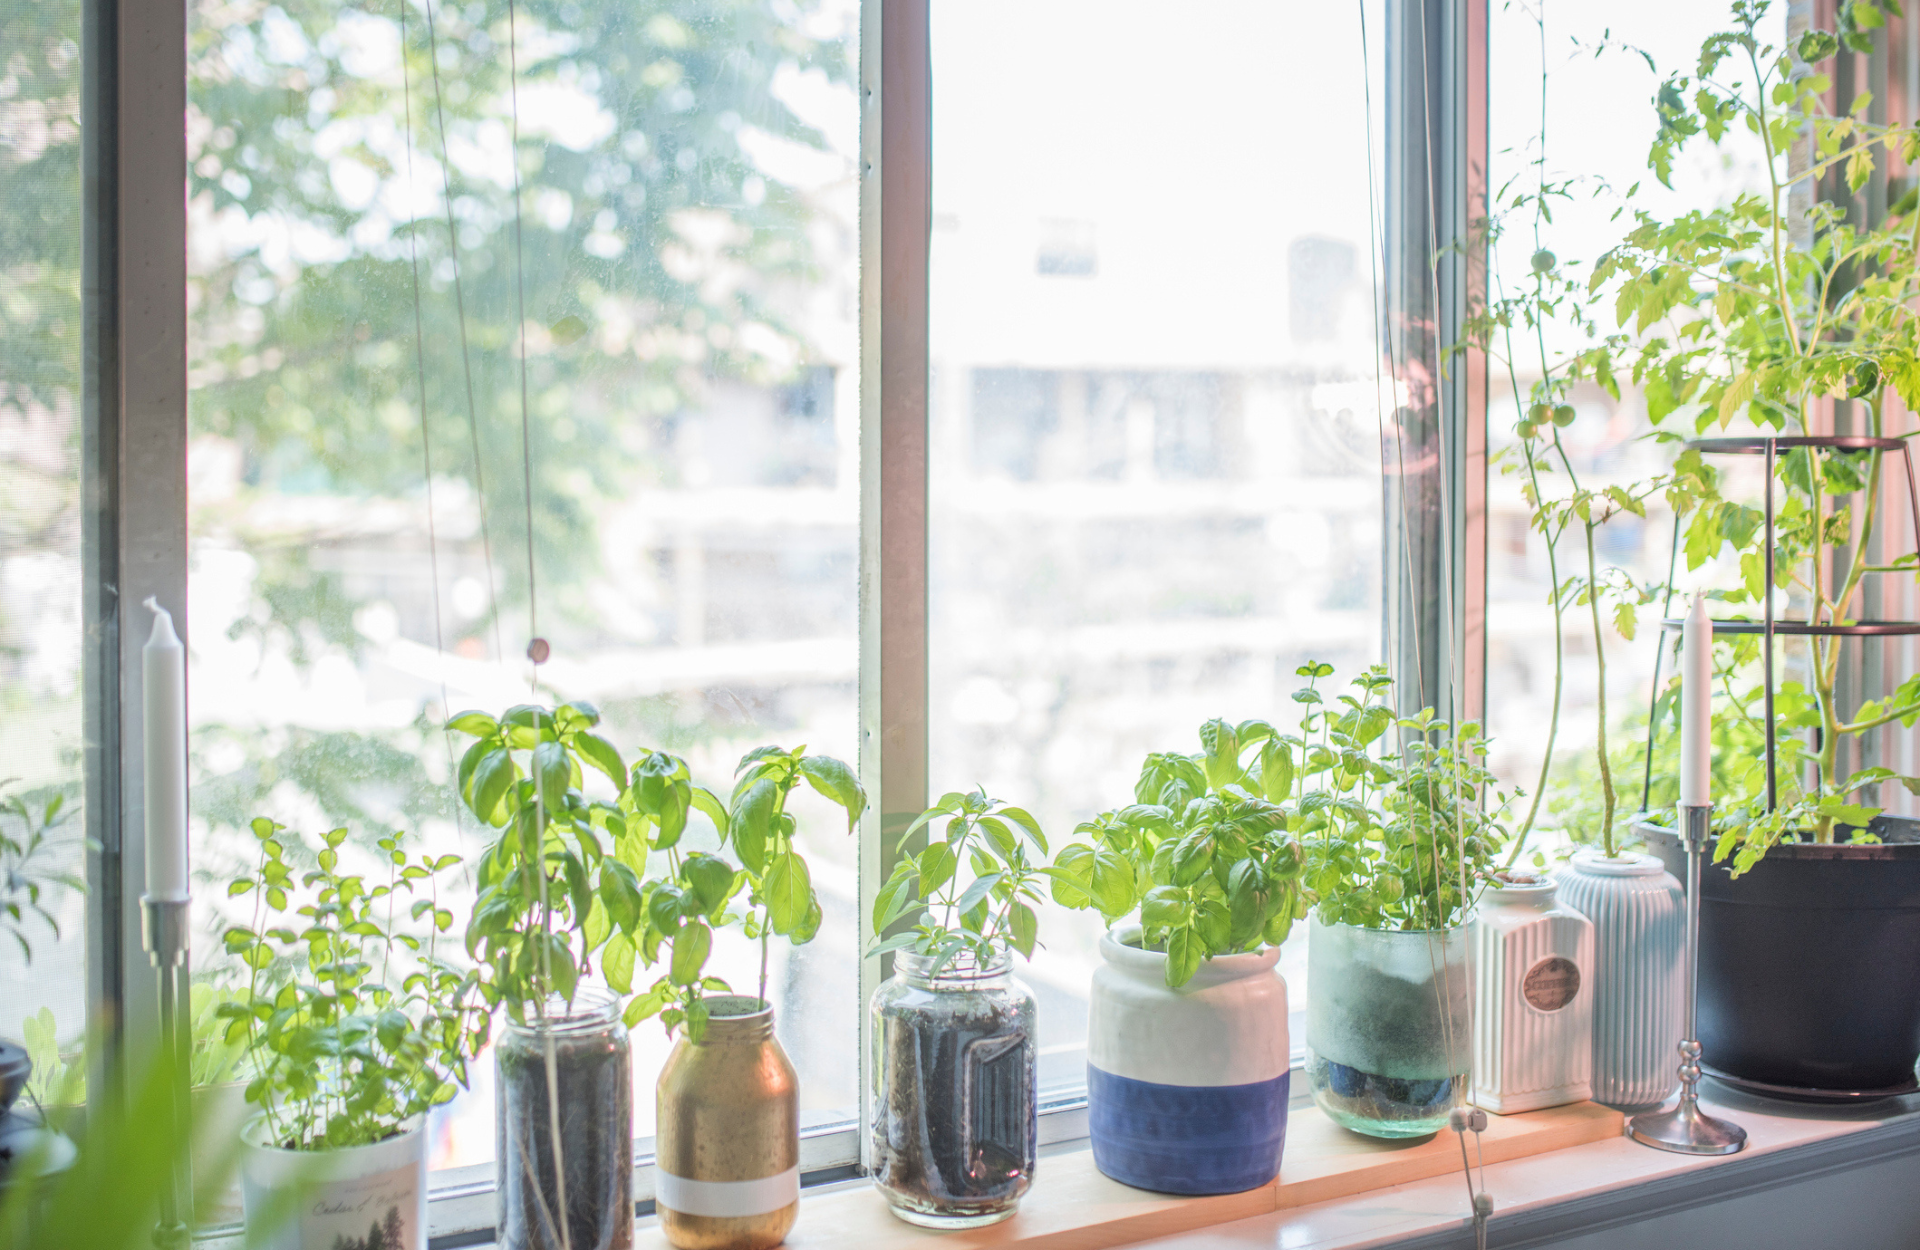 Windowsill with herbs growing